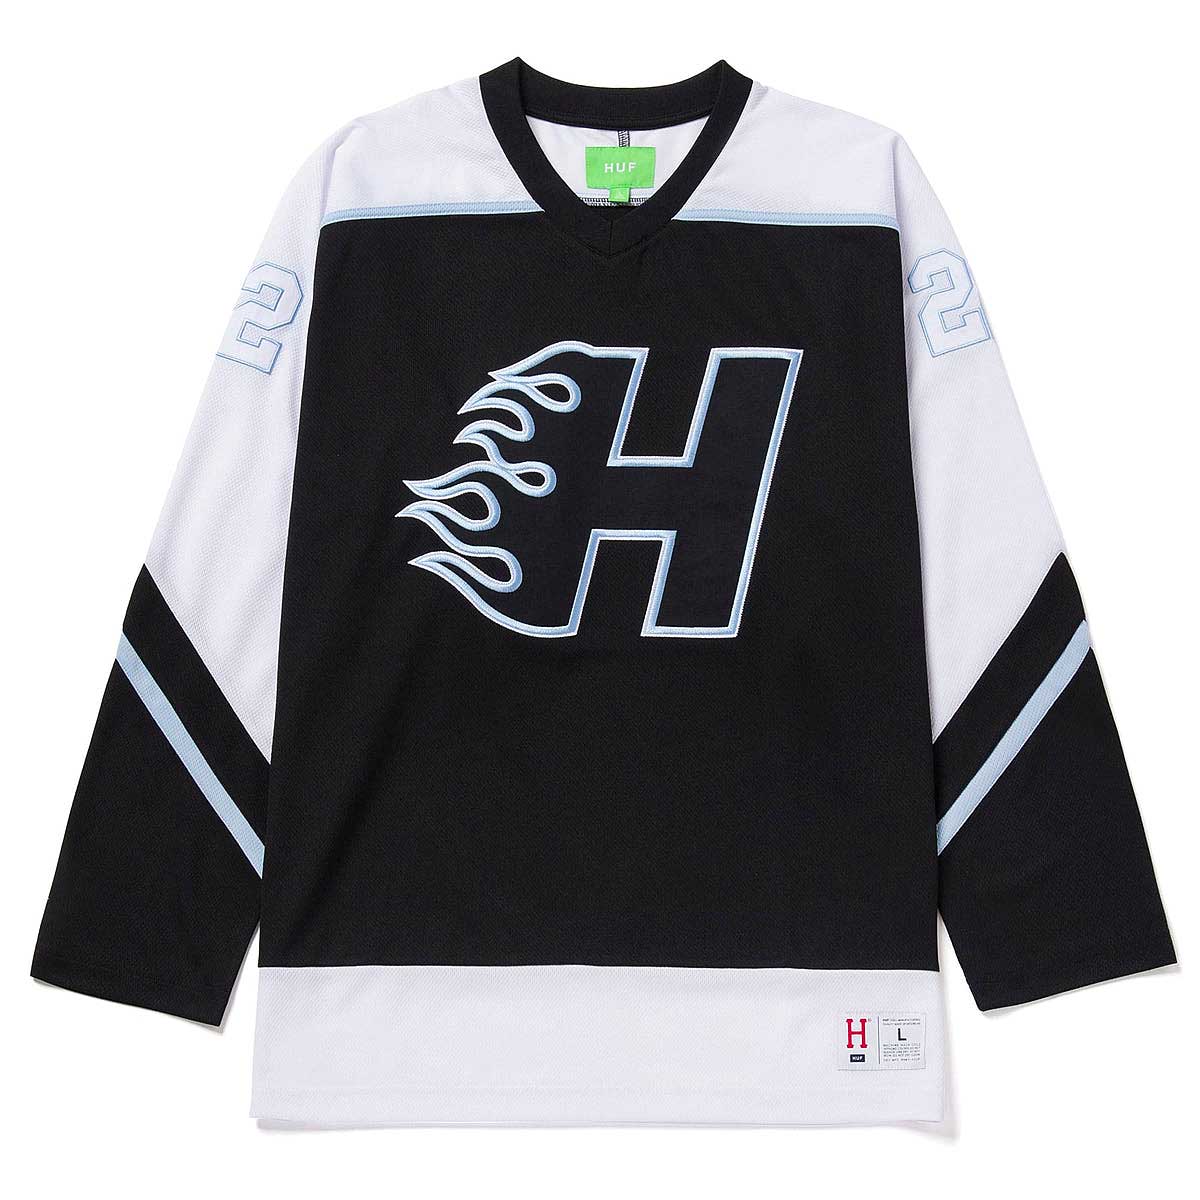 Huf Enforcer Hockey Jersey, Black